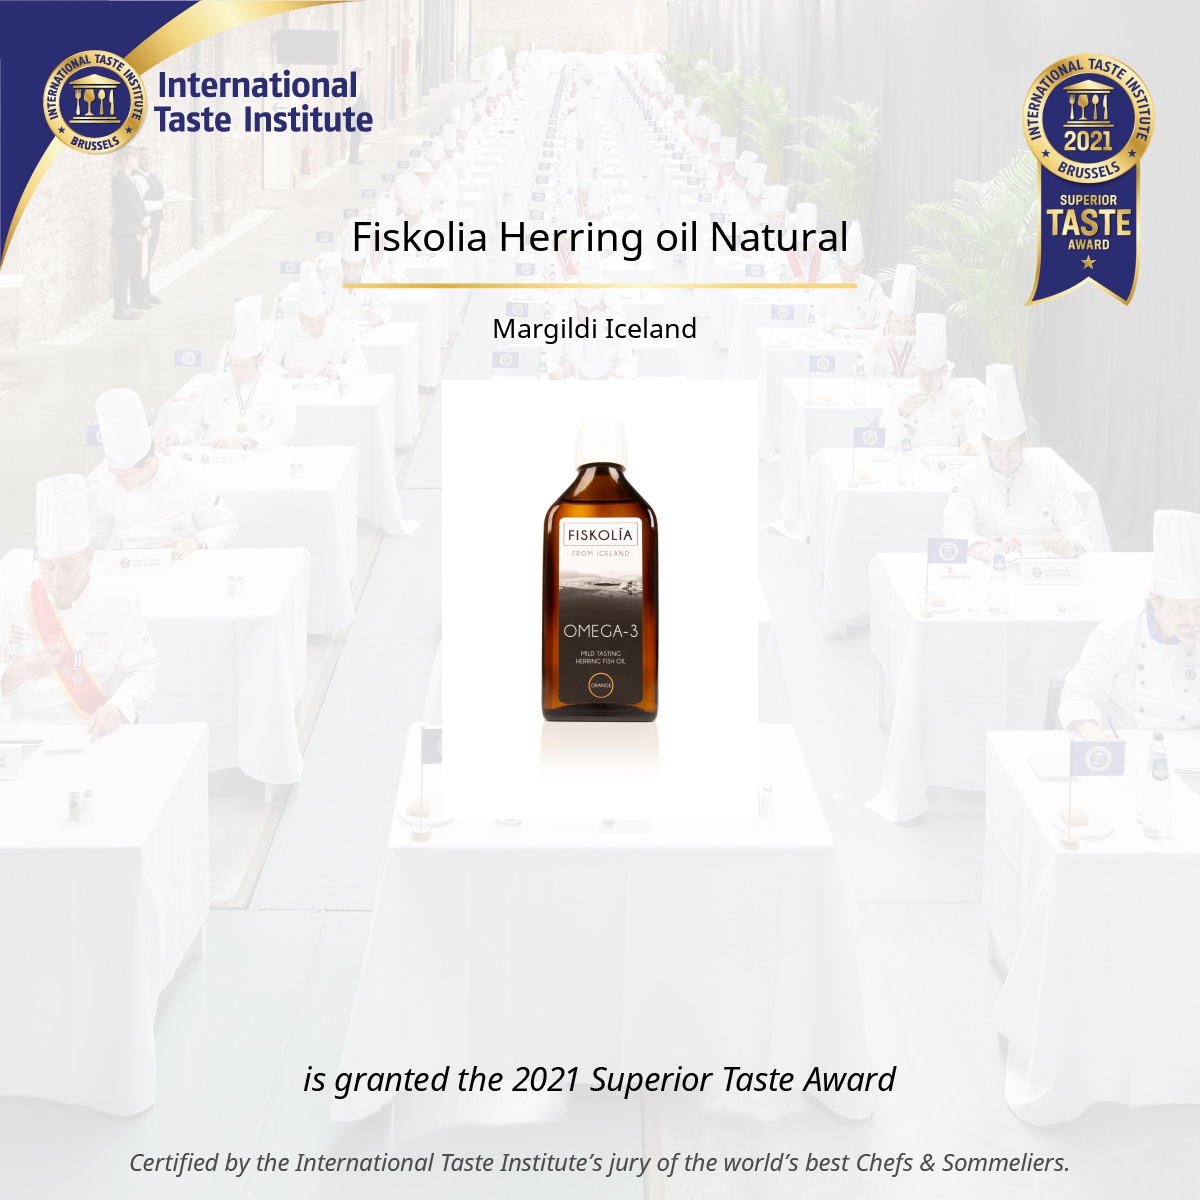 Square image of Fiskolia Herring oil Natural